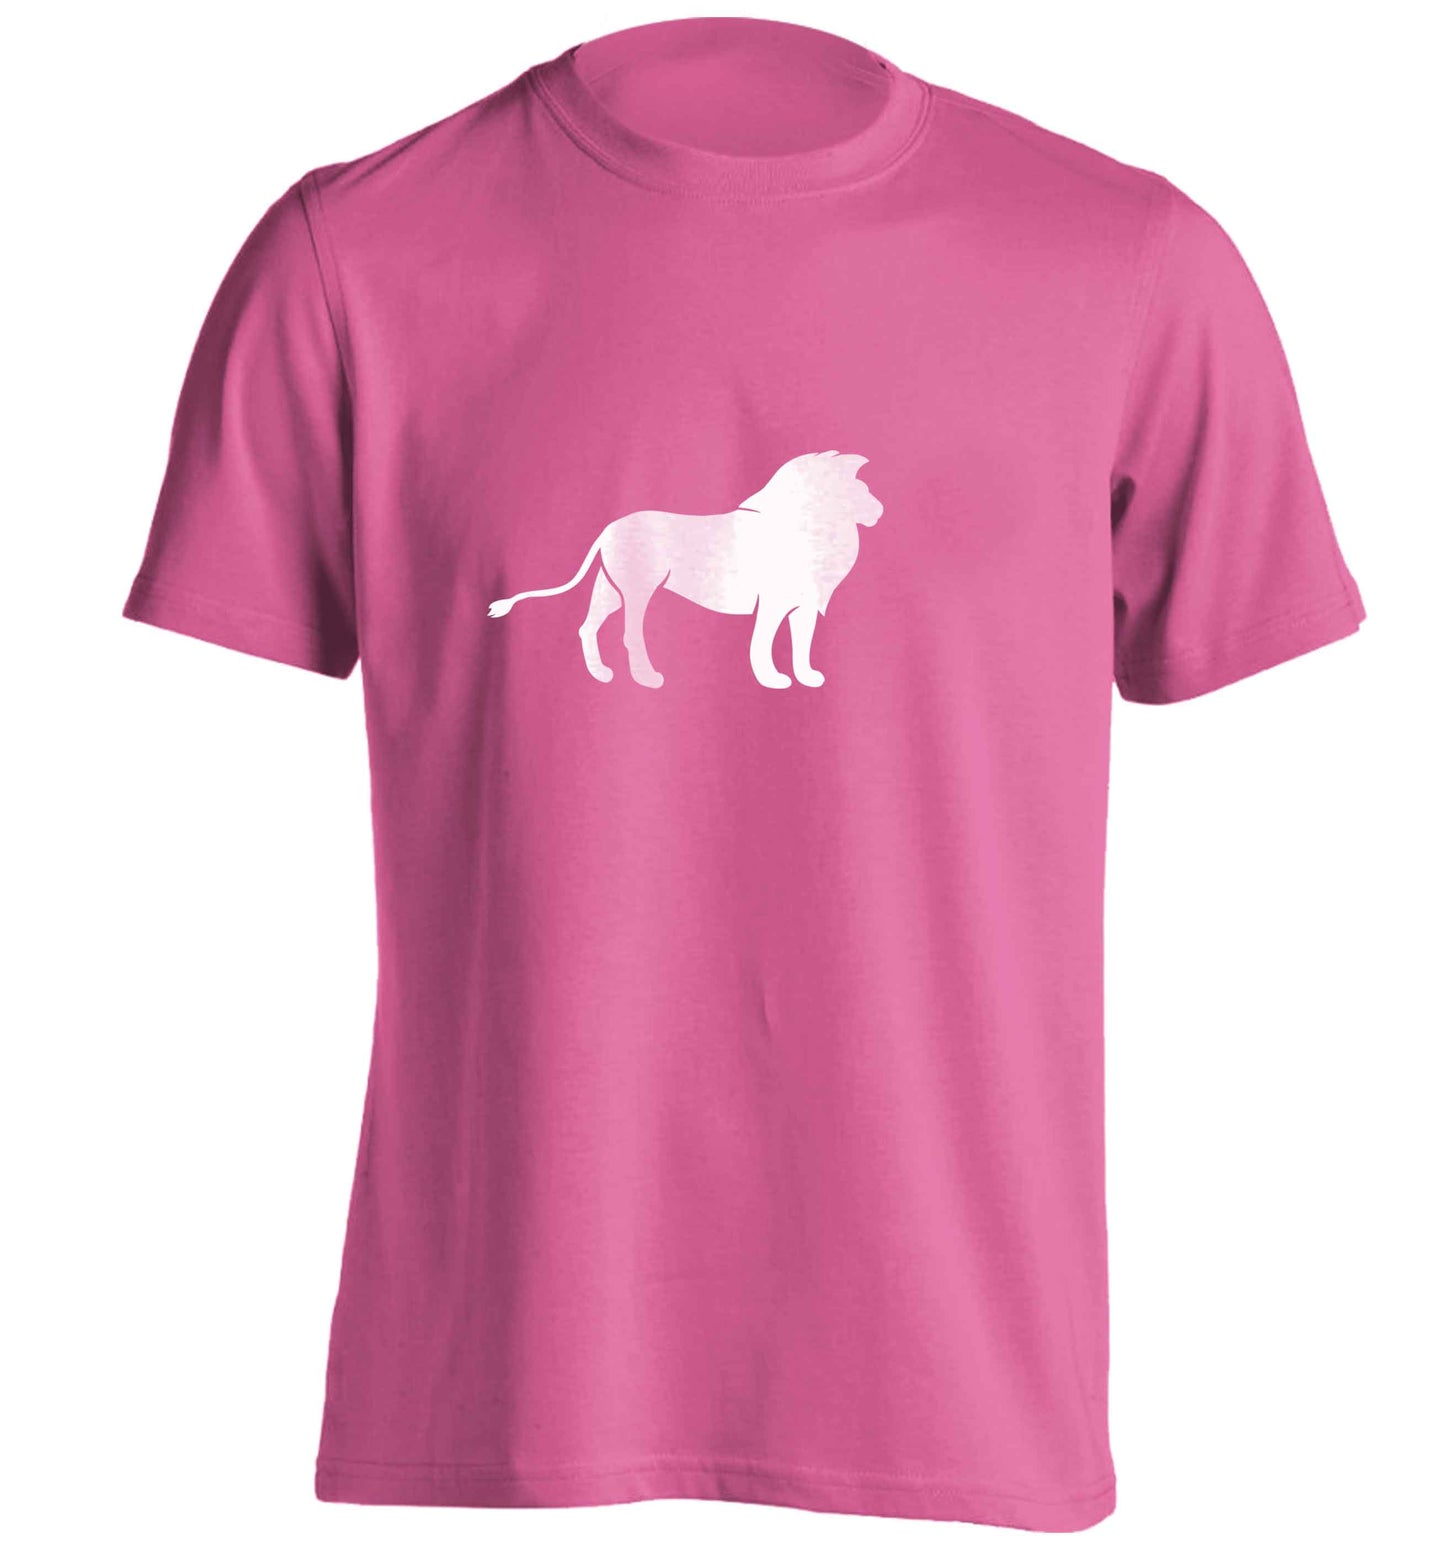 Gold lion adults unisex pink Tshirt 2XL